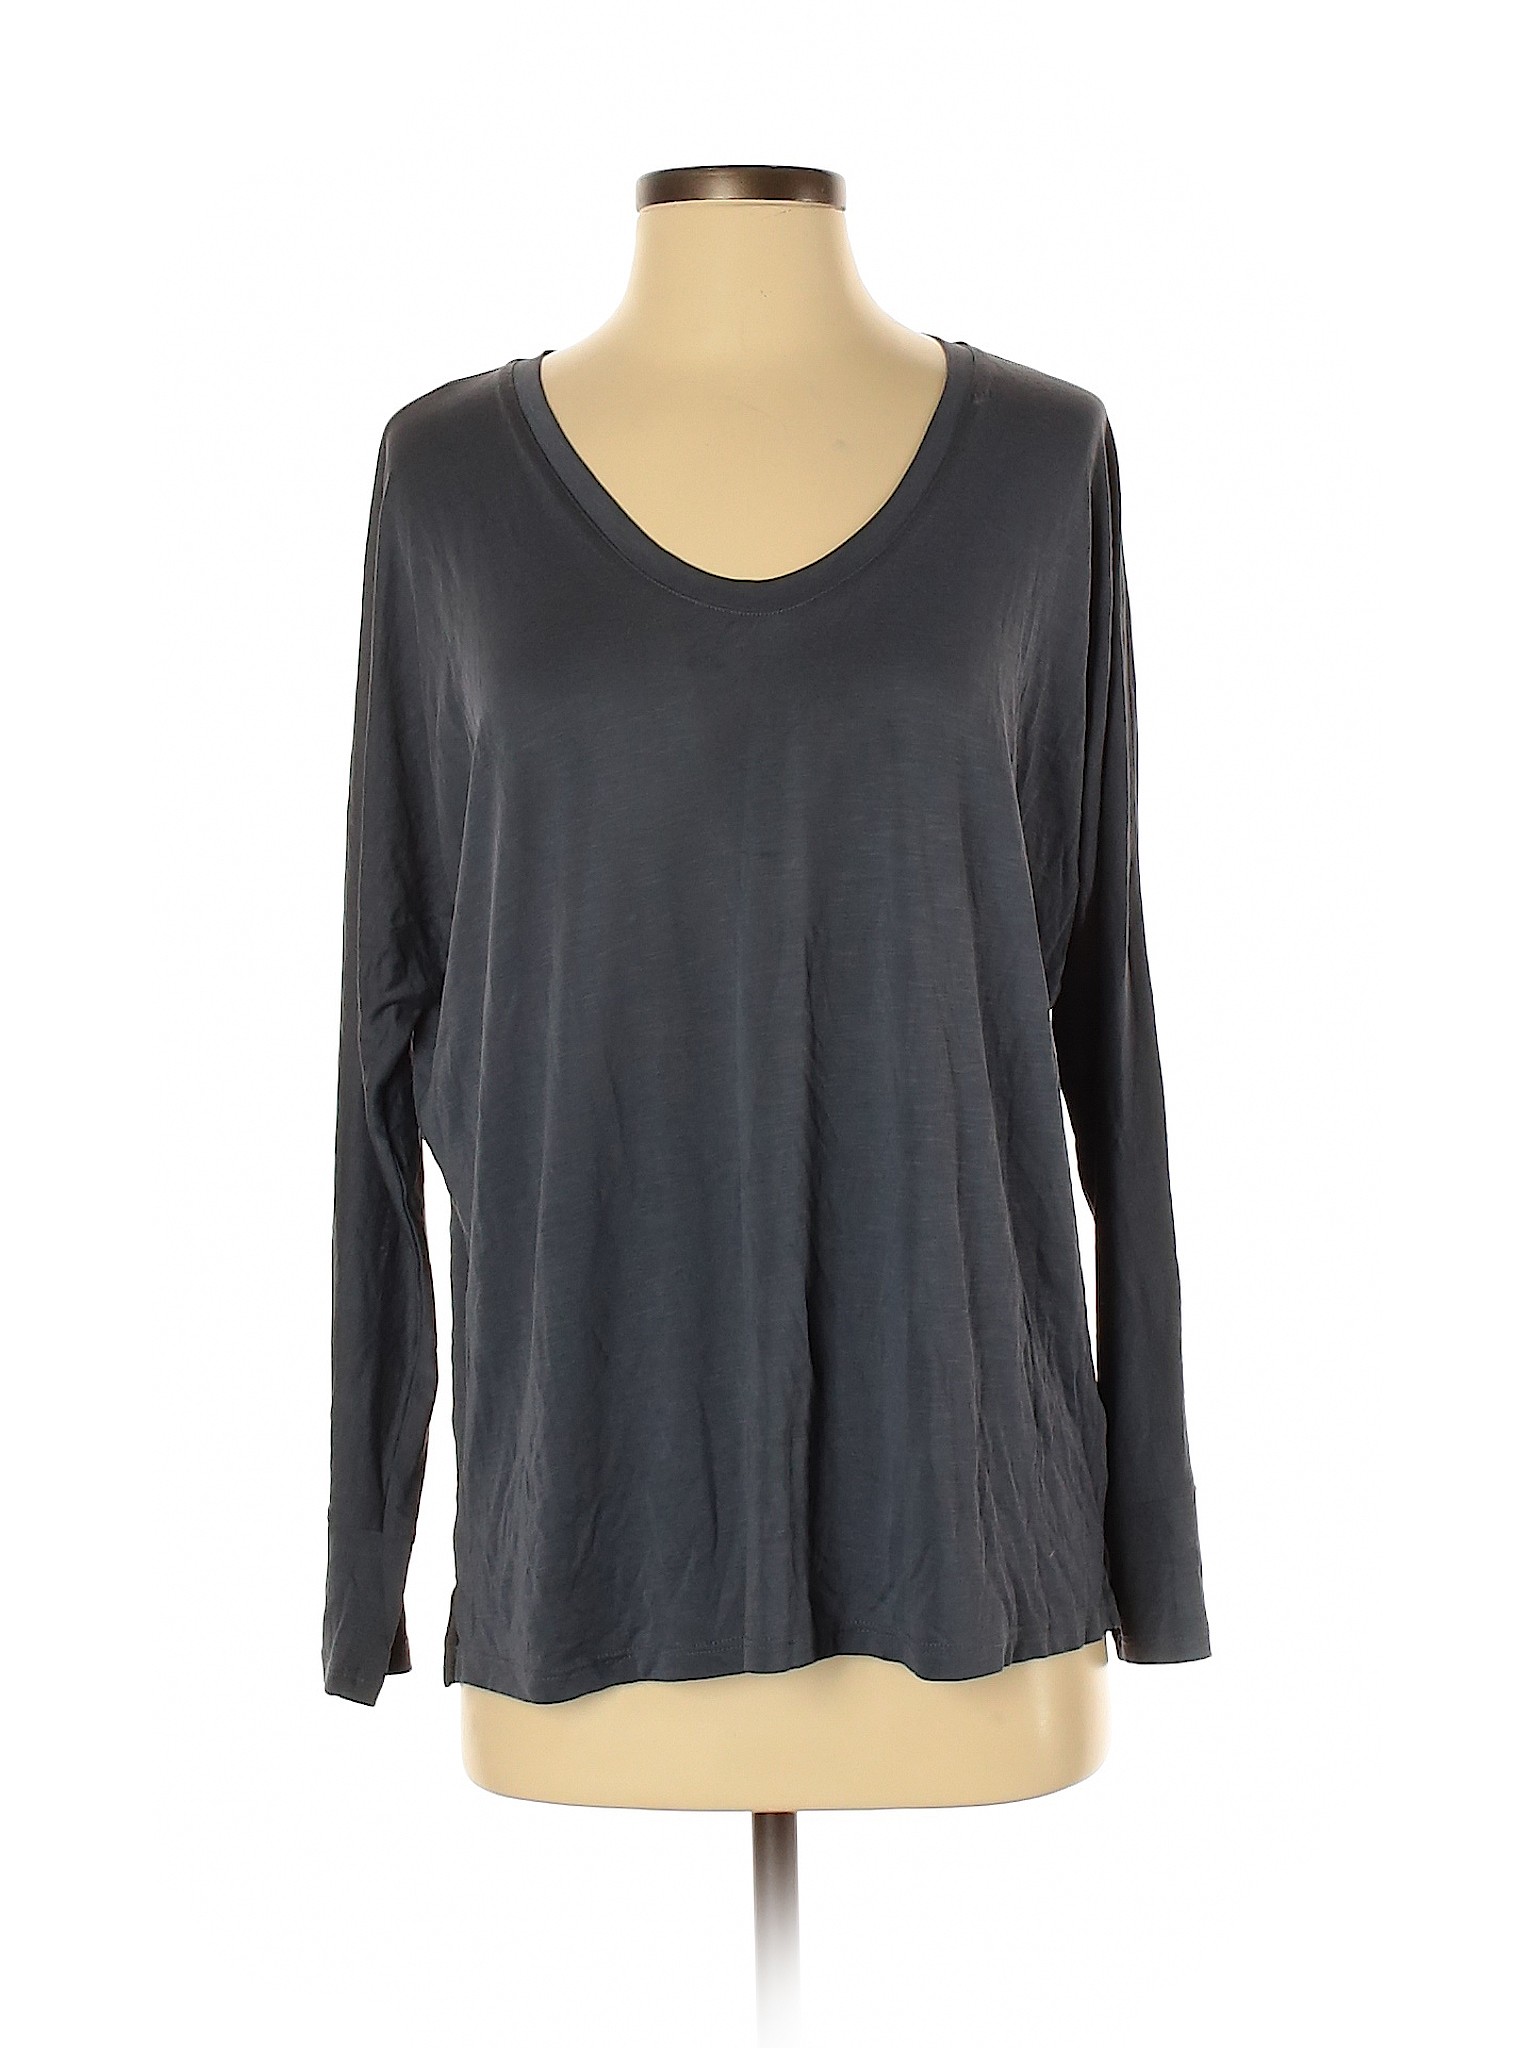 Nic + Zoe Women Gray Long Sleeve T-Shirt S | eBay